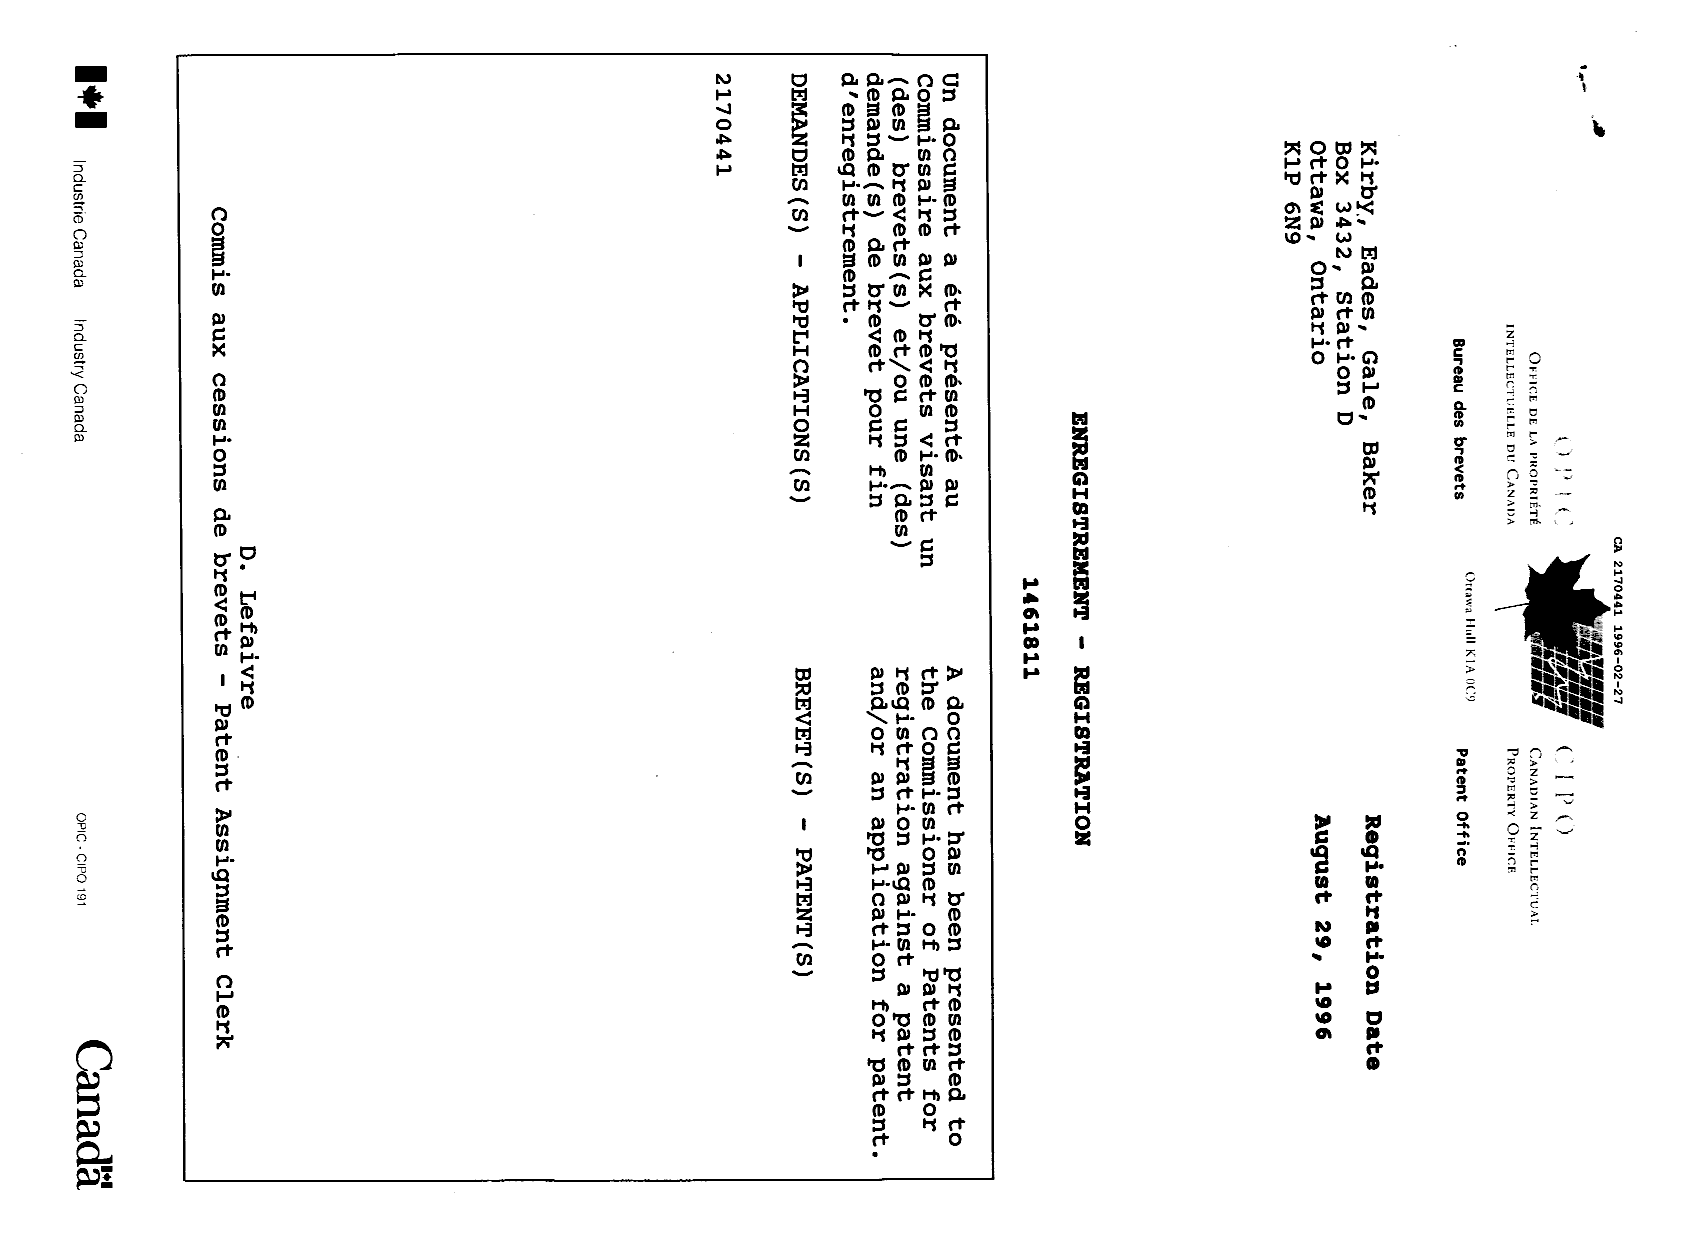 Canadian Patent Document 2170441. Prosecution Correspondence 19960227. Image 1 of 14